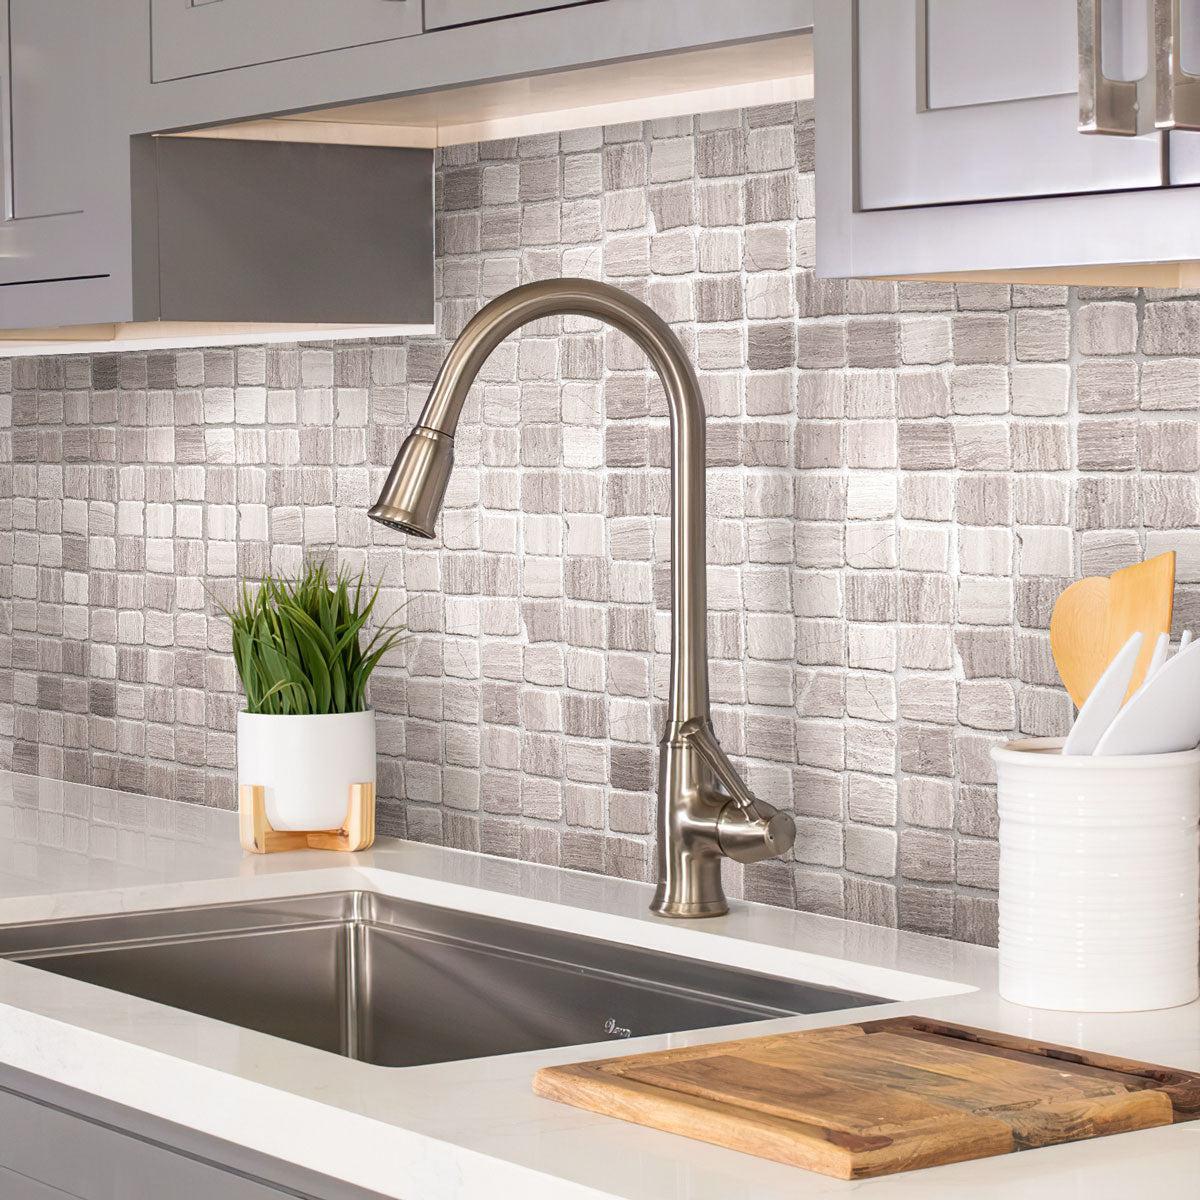 Wooden gray tile kitchen backsplash